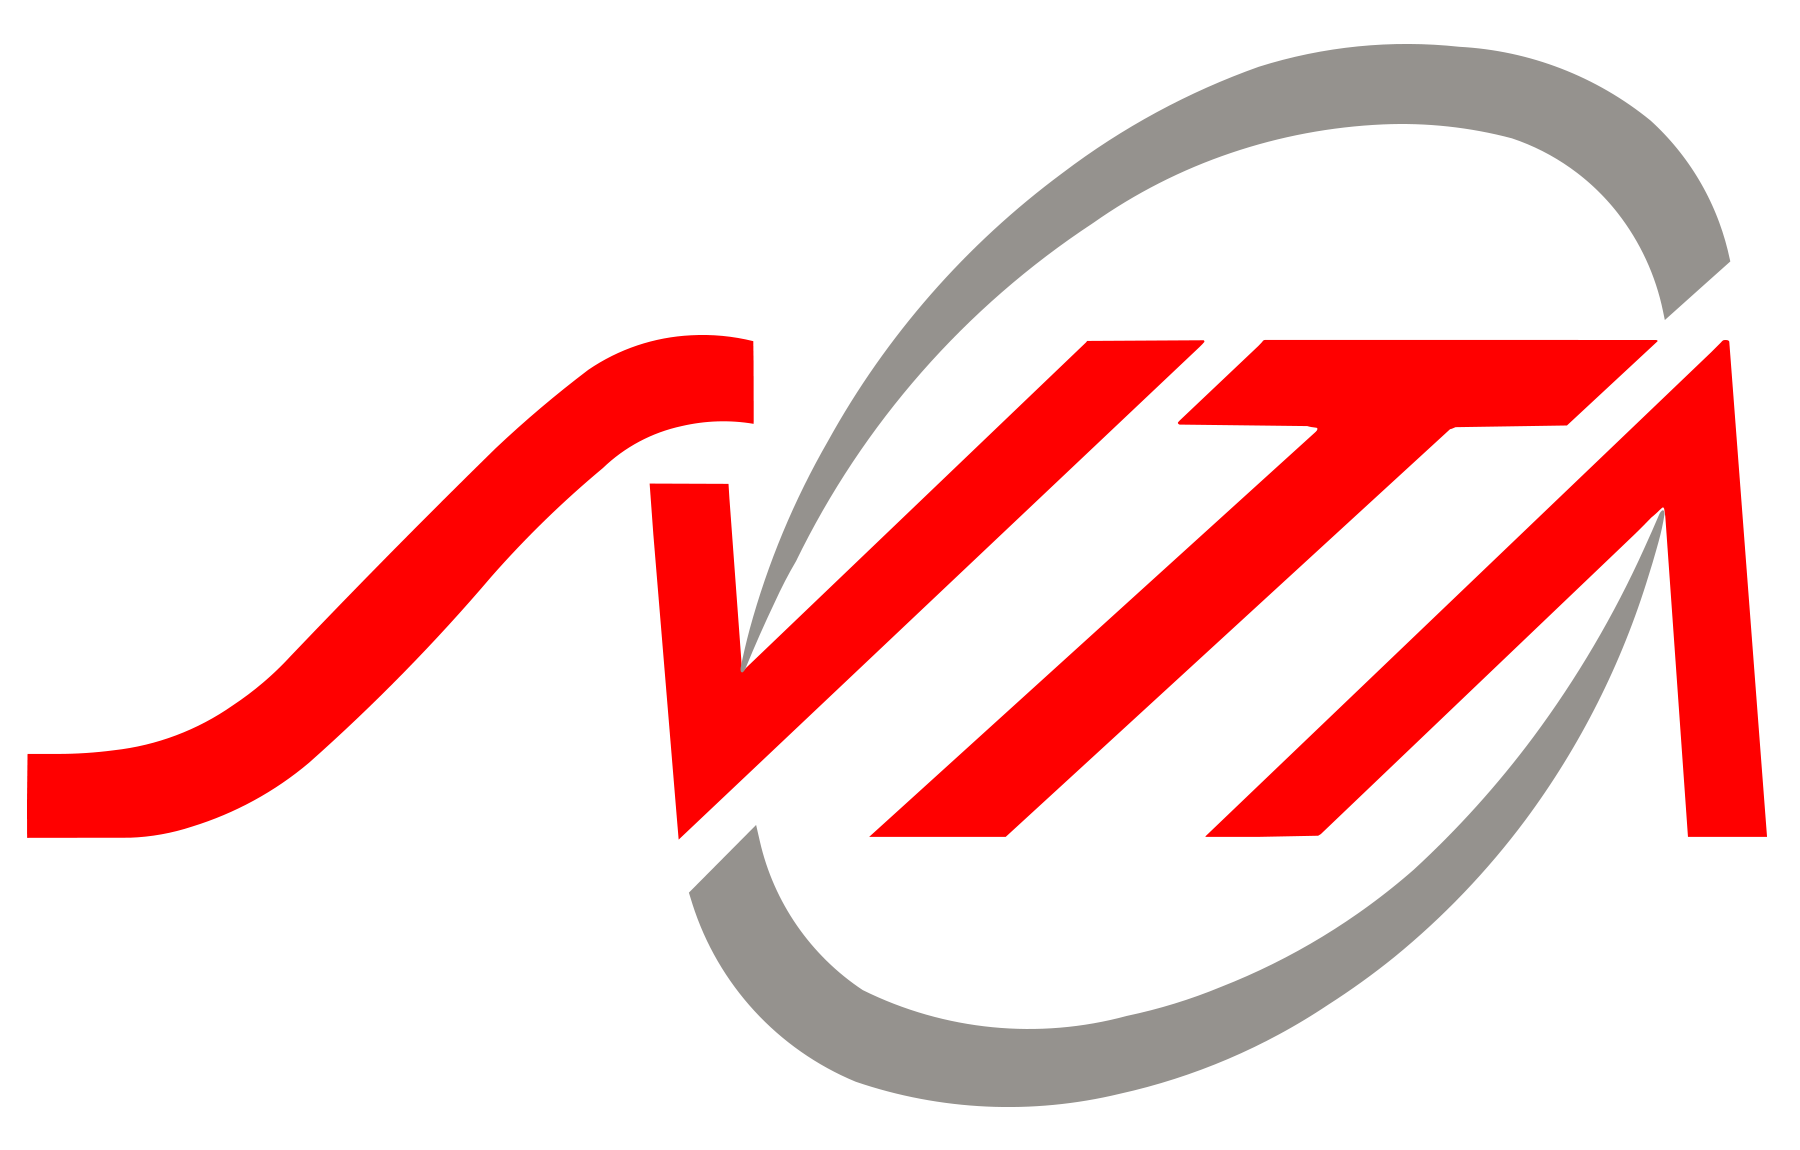 Singapore Vehicle Traders Association logo